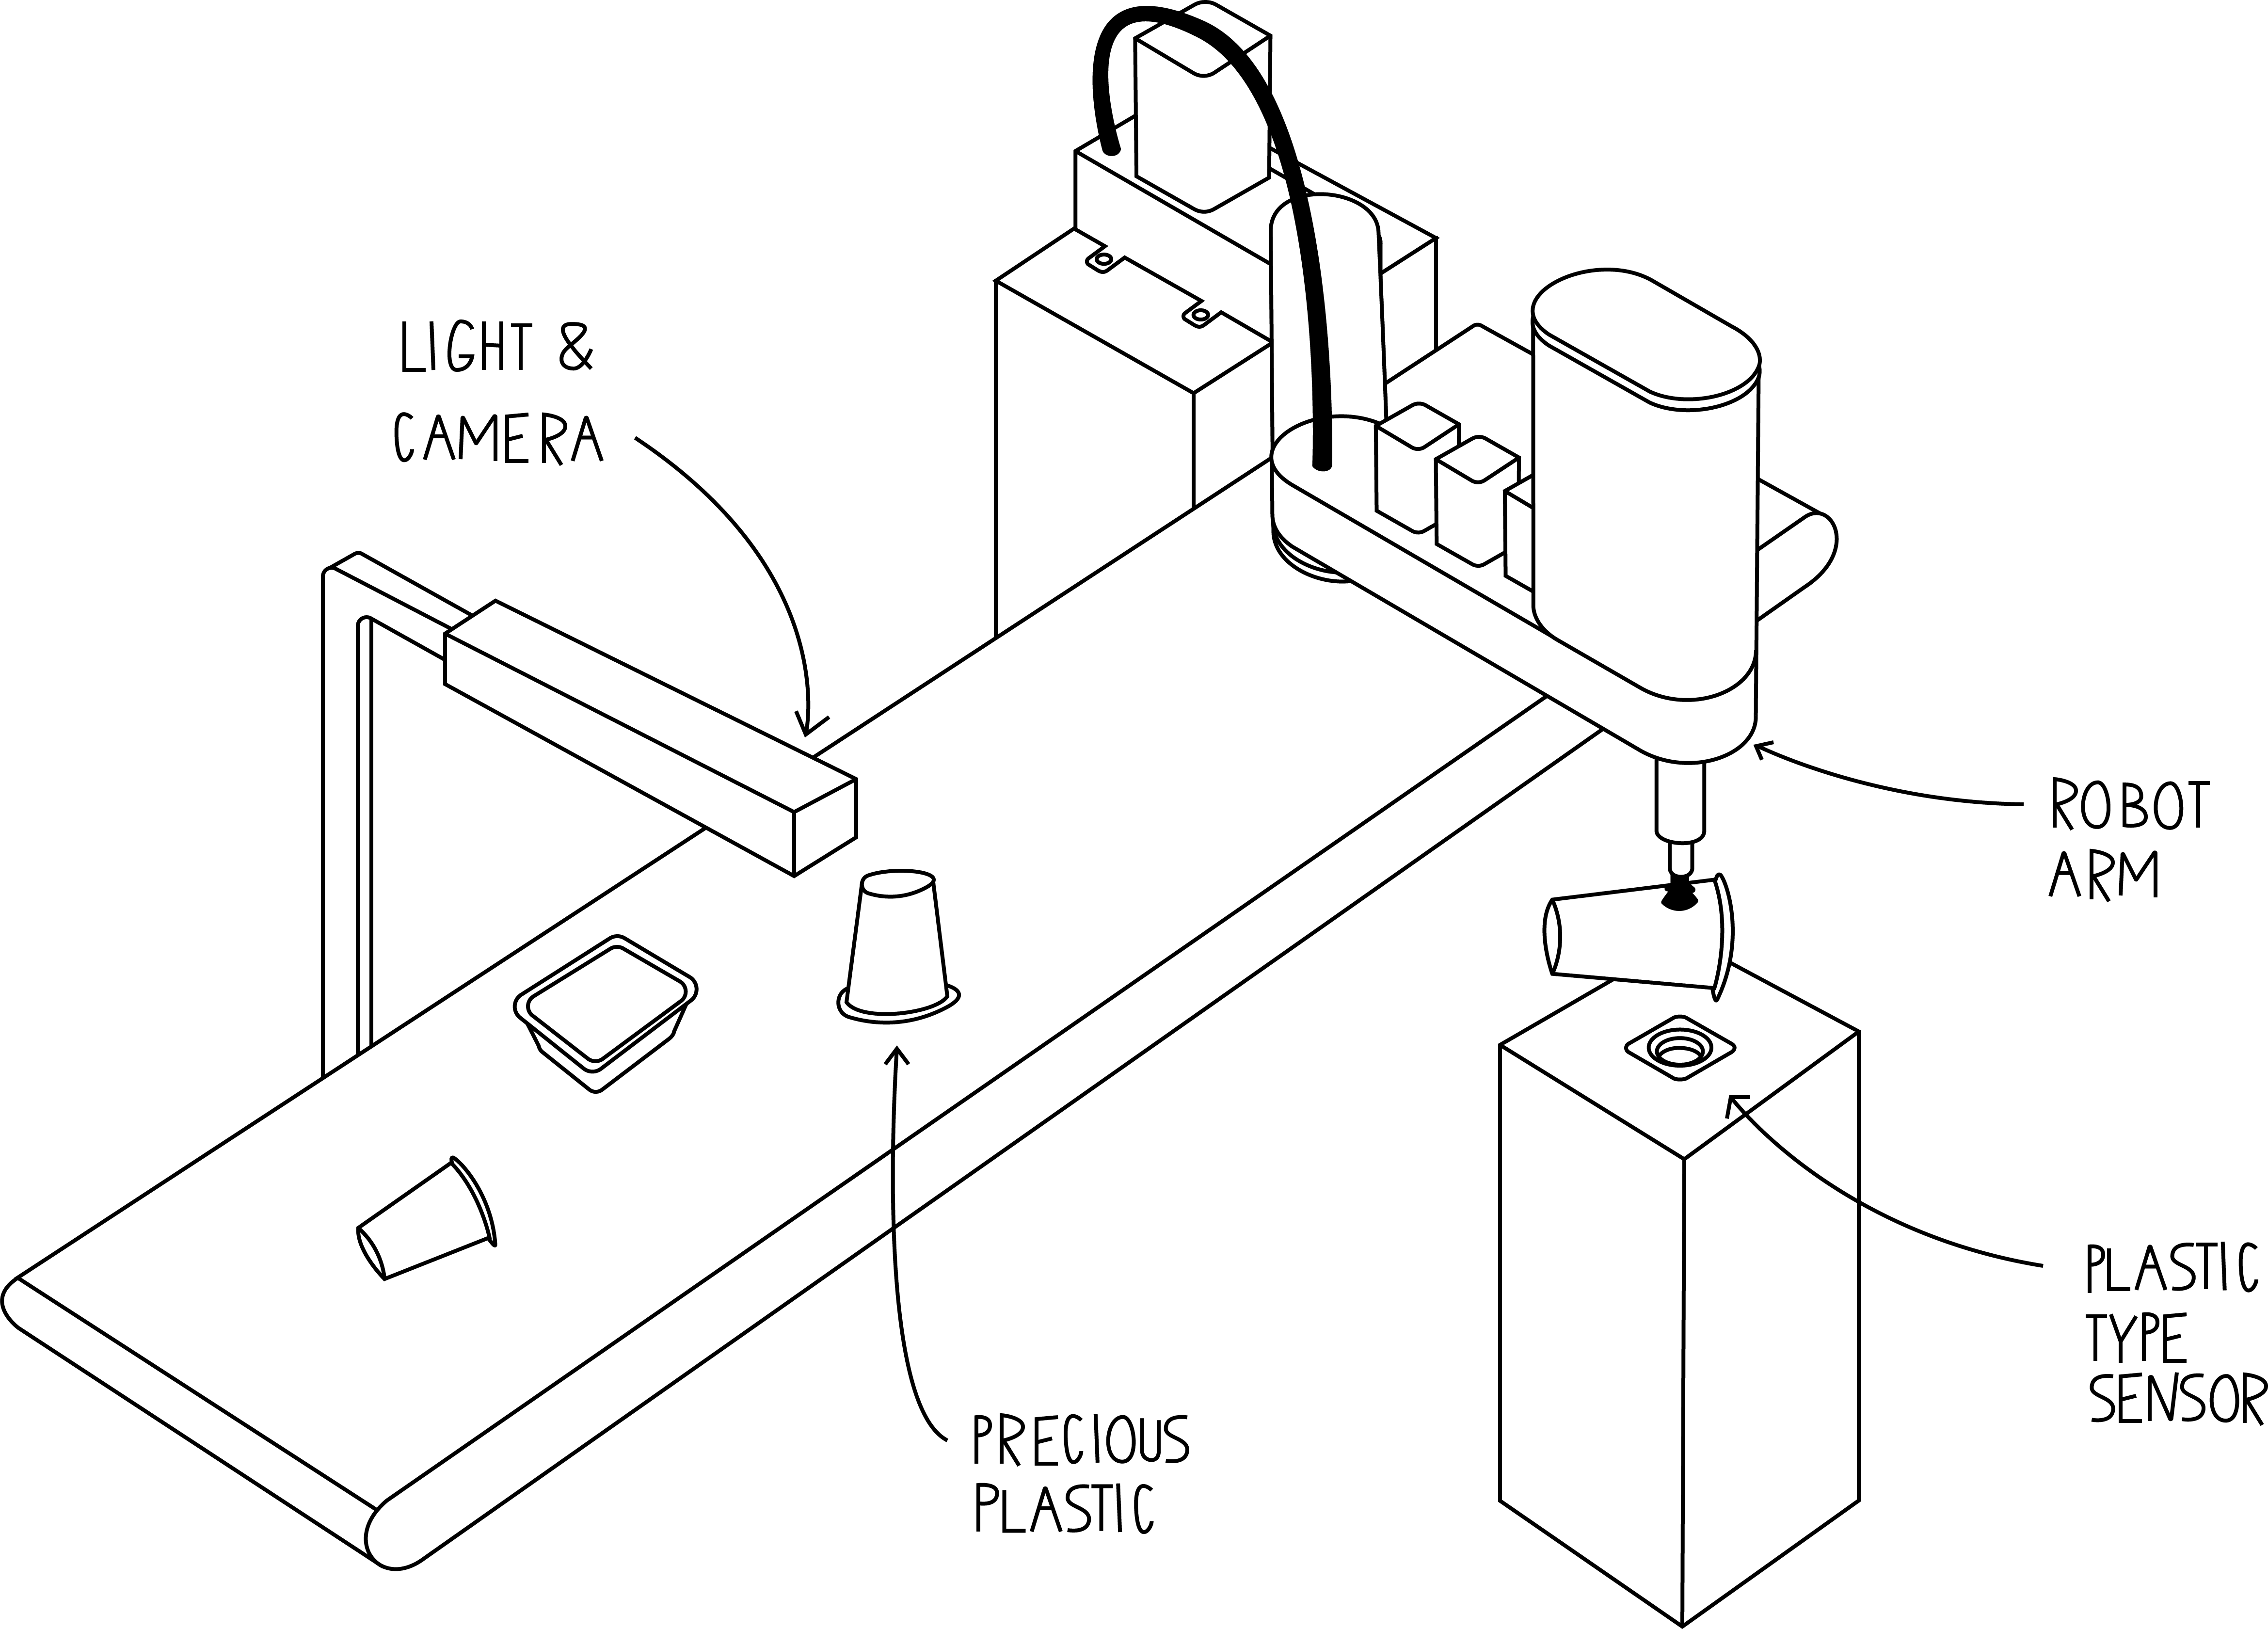 Figure 1: Sorting line with conveyor belt, camera, robot arm, and plastic sensor